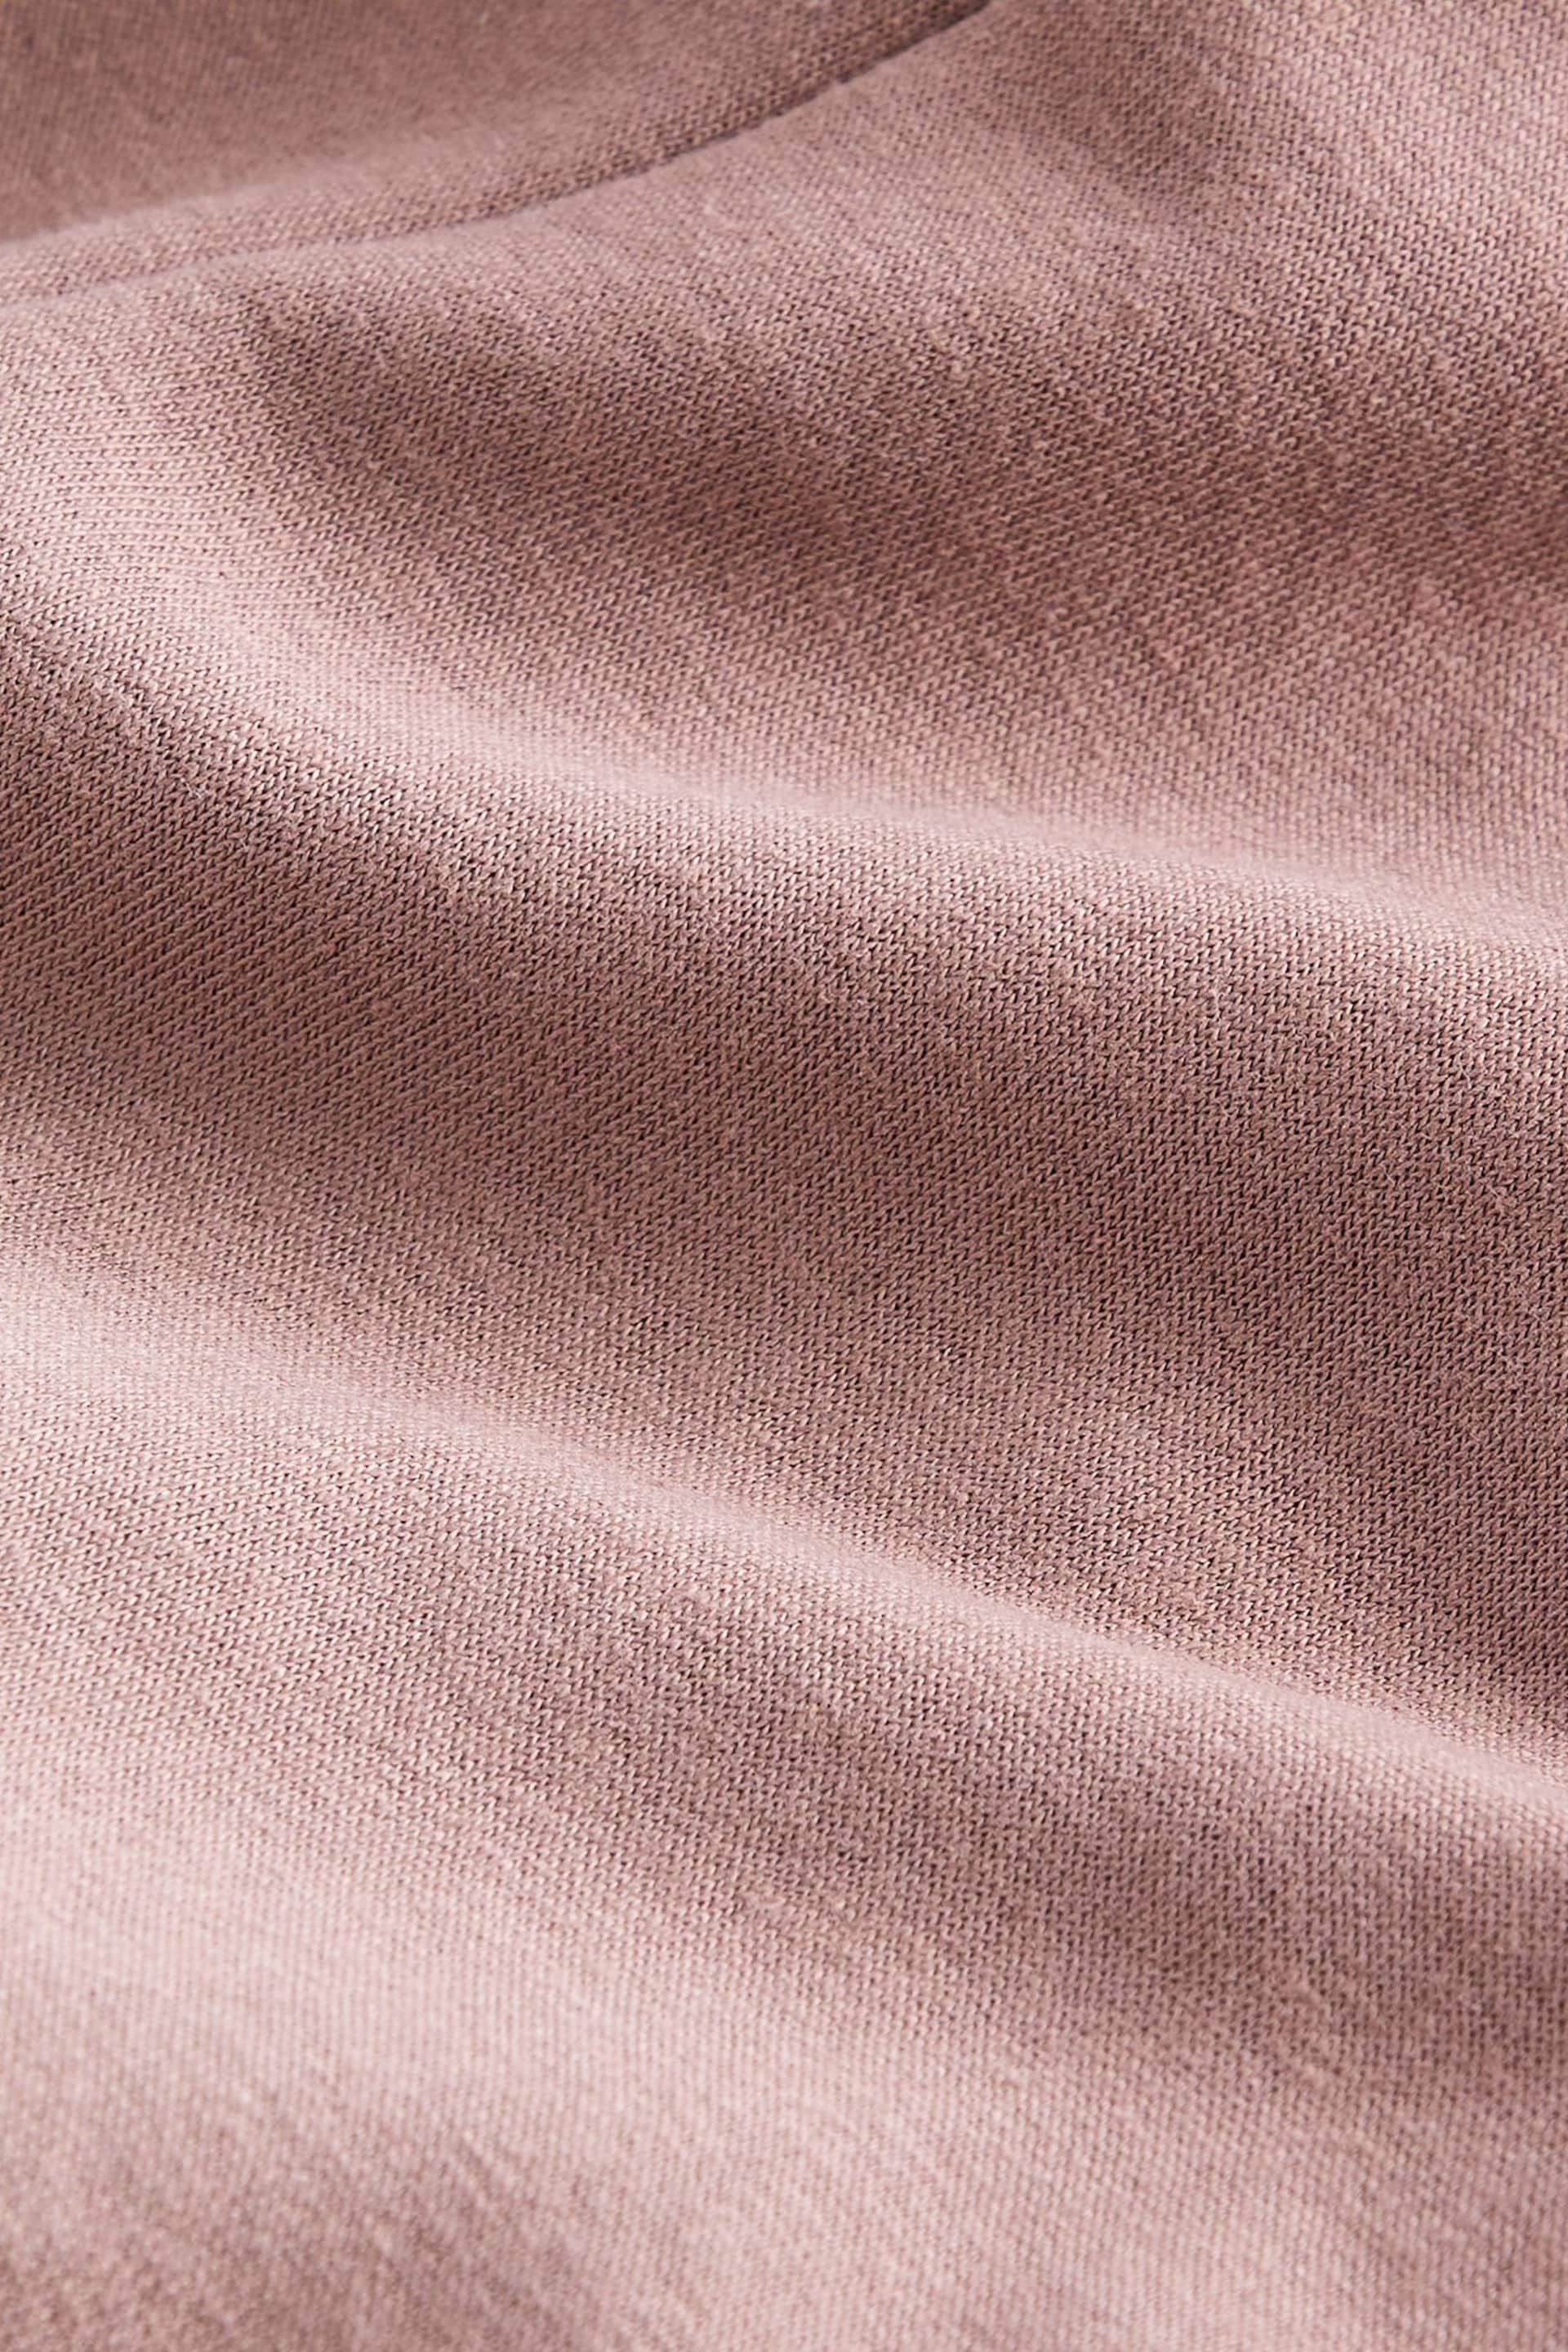 self. Mauve Purple Cotton Blend Cuffed Joggers - Image 10 of 10